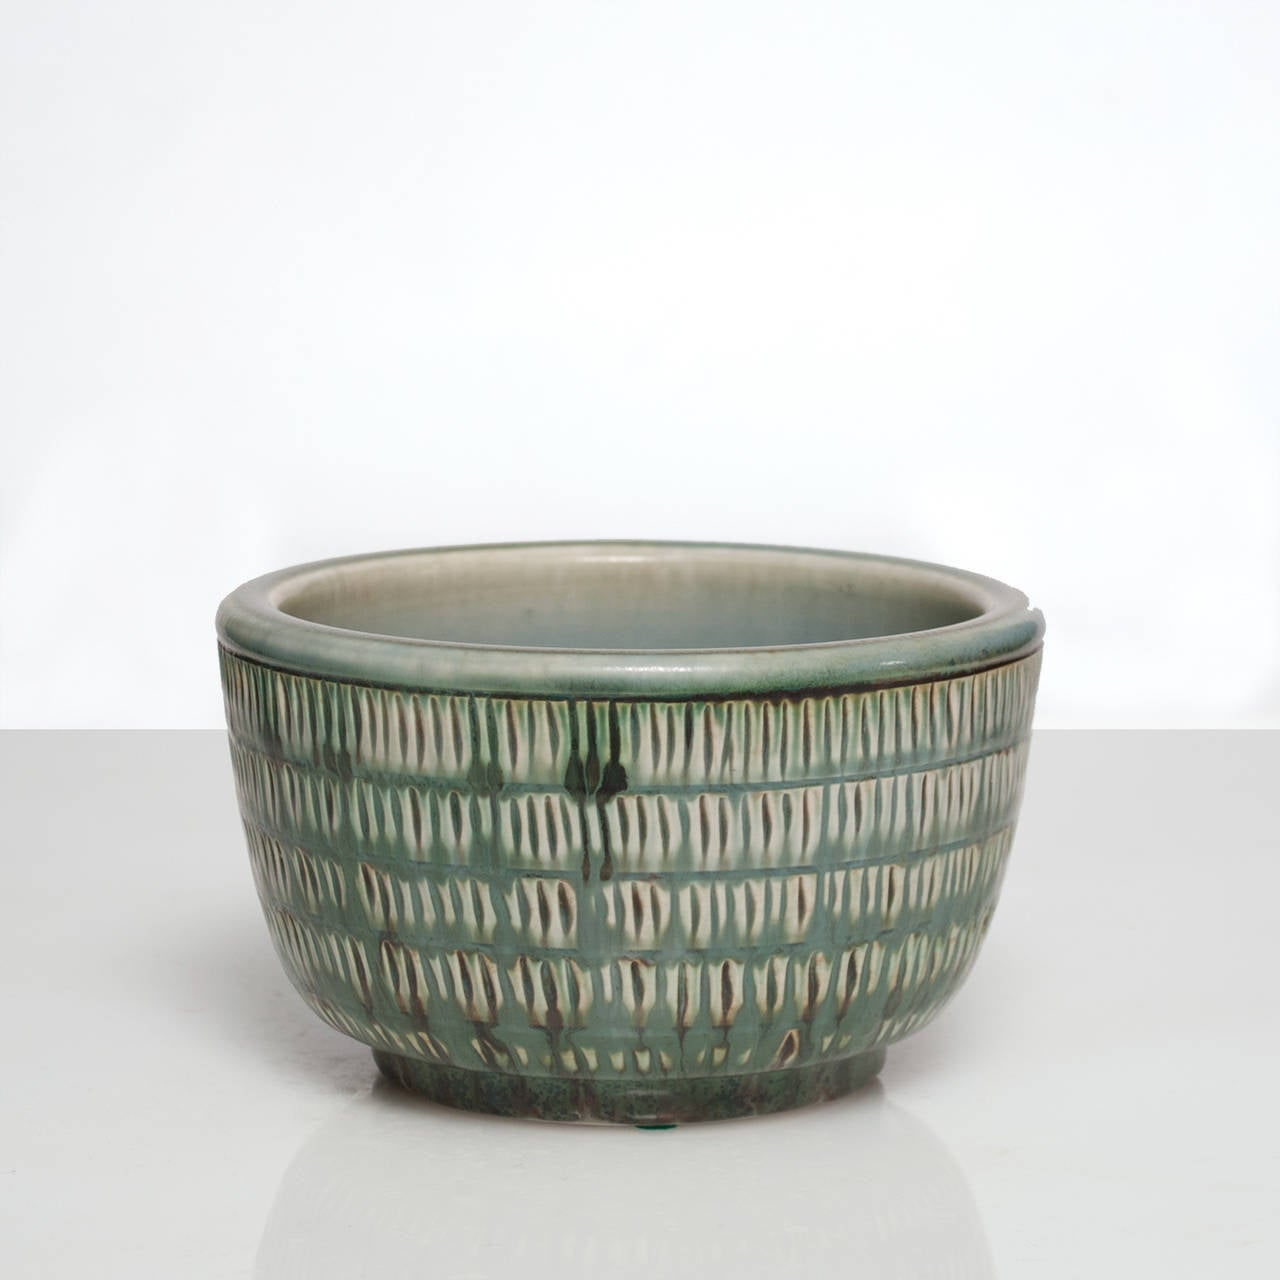 Glazed Swedish art deco ceramic bowl by Gertrud Lonegren in green glaze.